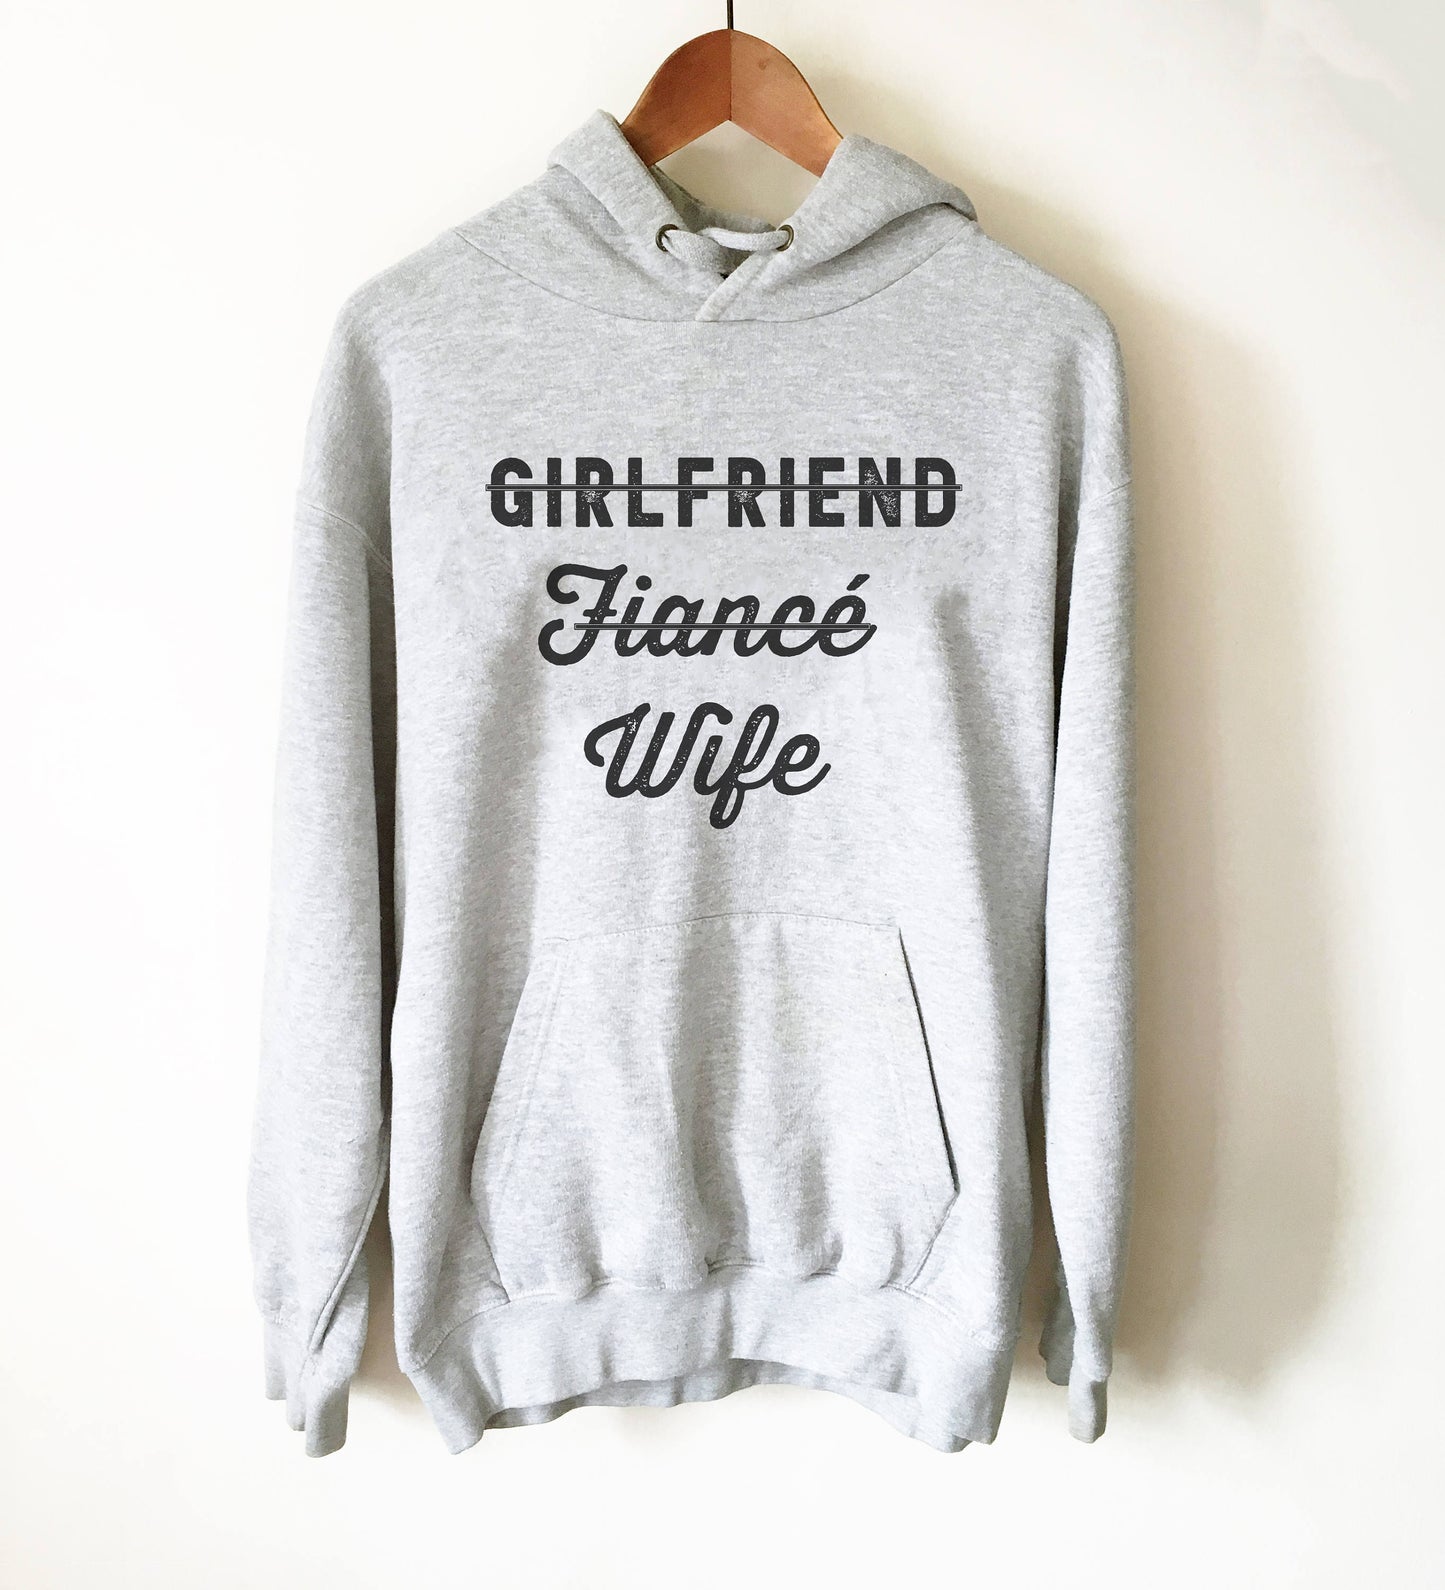 Girlfriend Fiance Wife Hoodie - Bachelorette party, Bride shirt, Bachelorette shirts, Wedding shirt, Engagement shirt